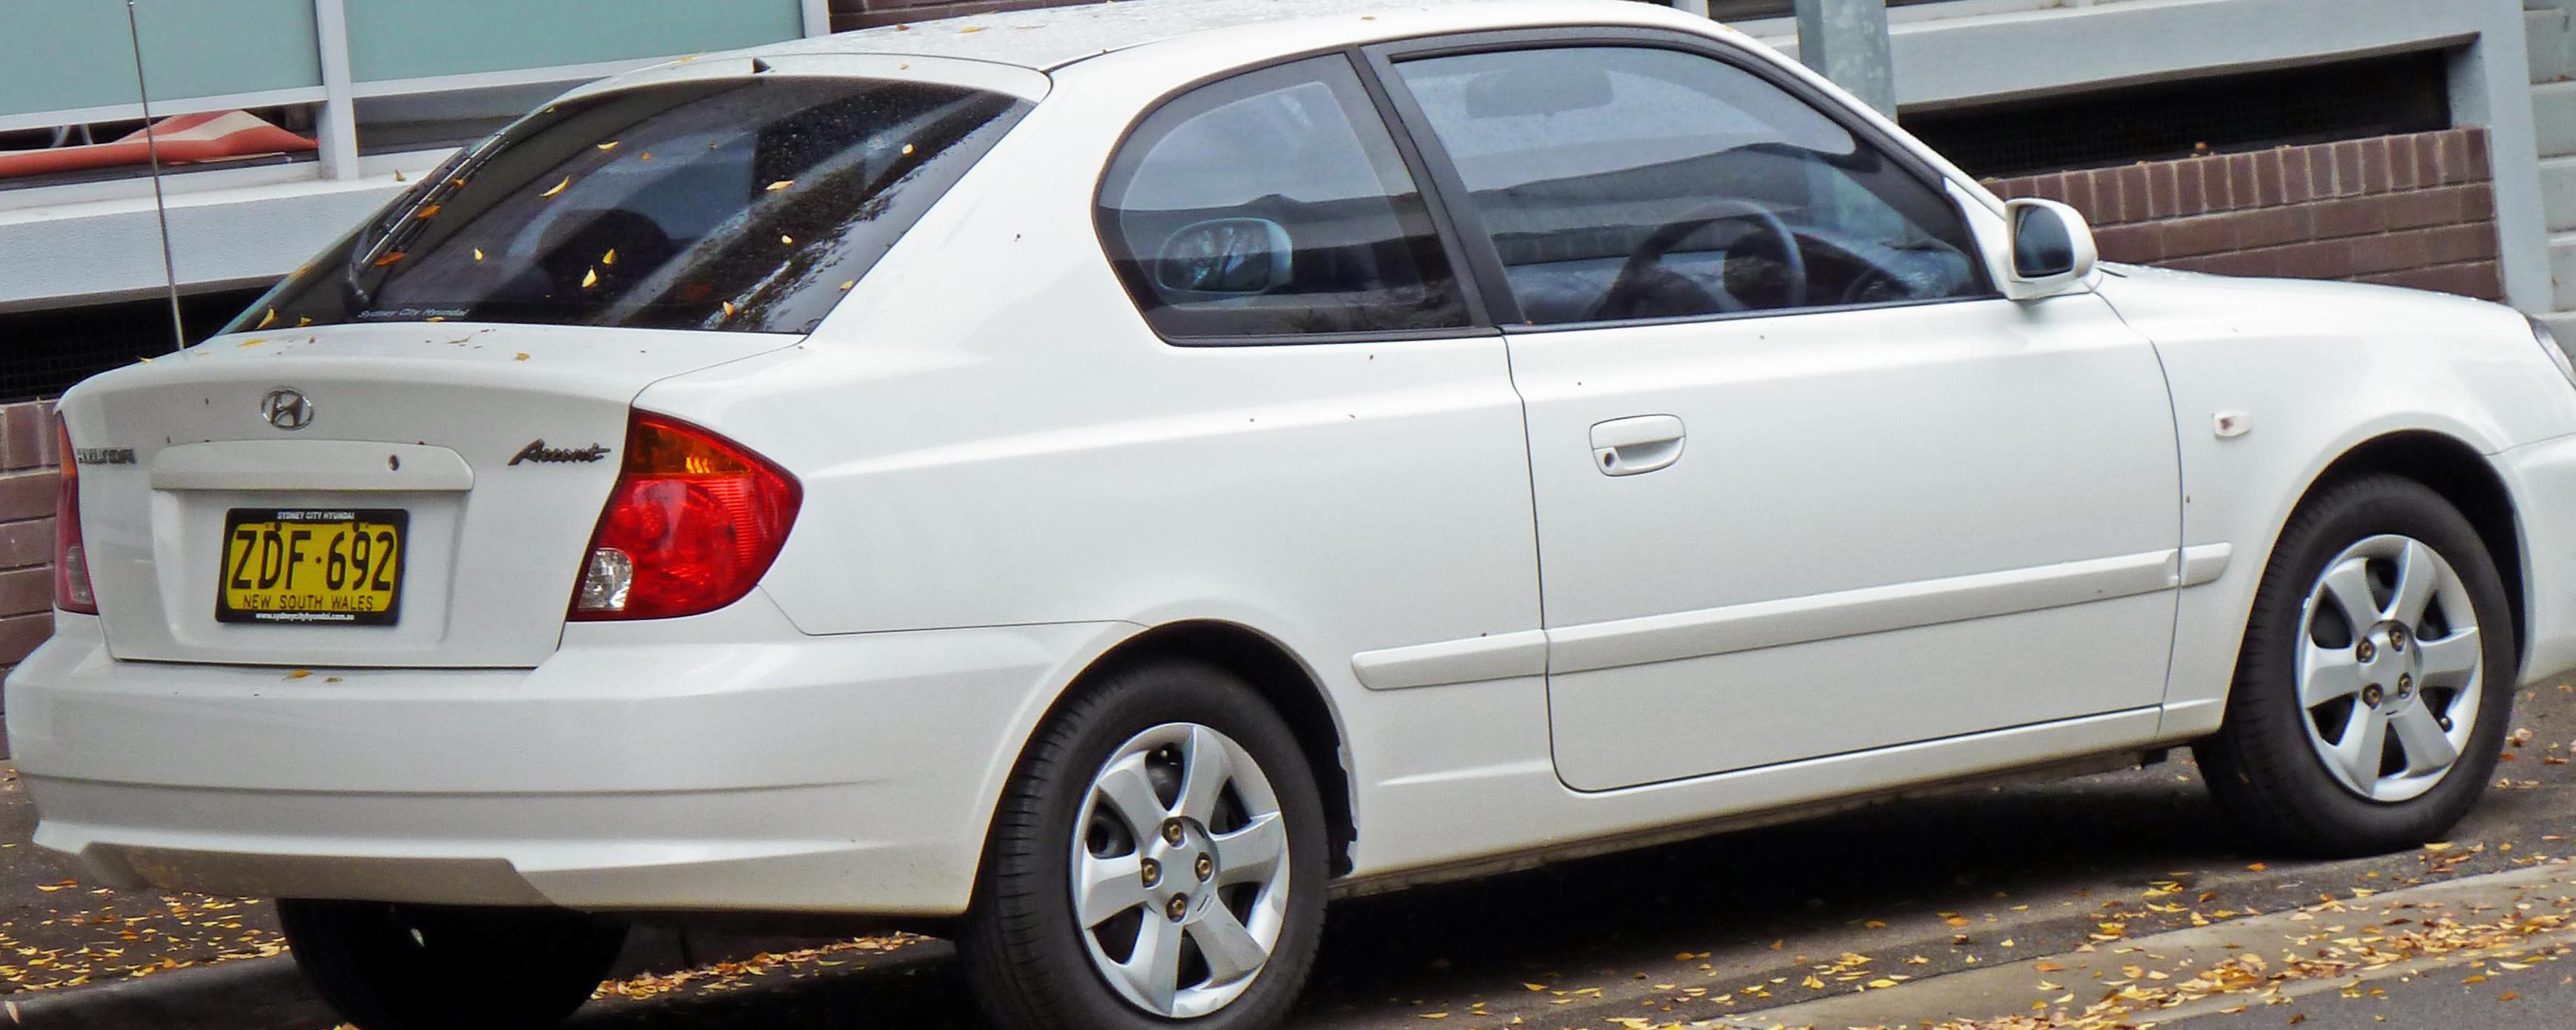 Accent Hatchback Hyundai usa 2010